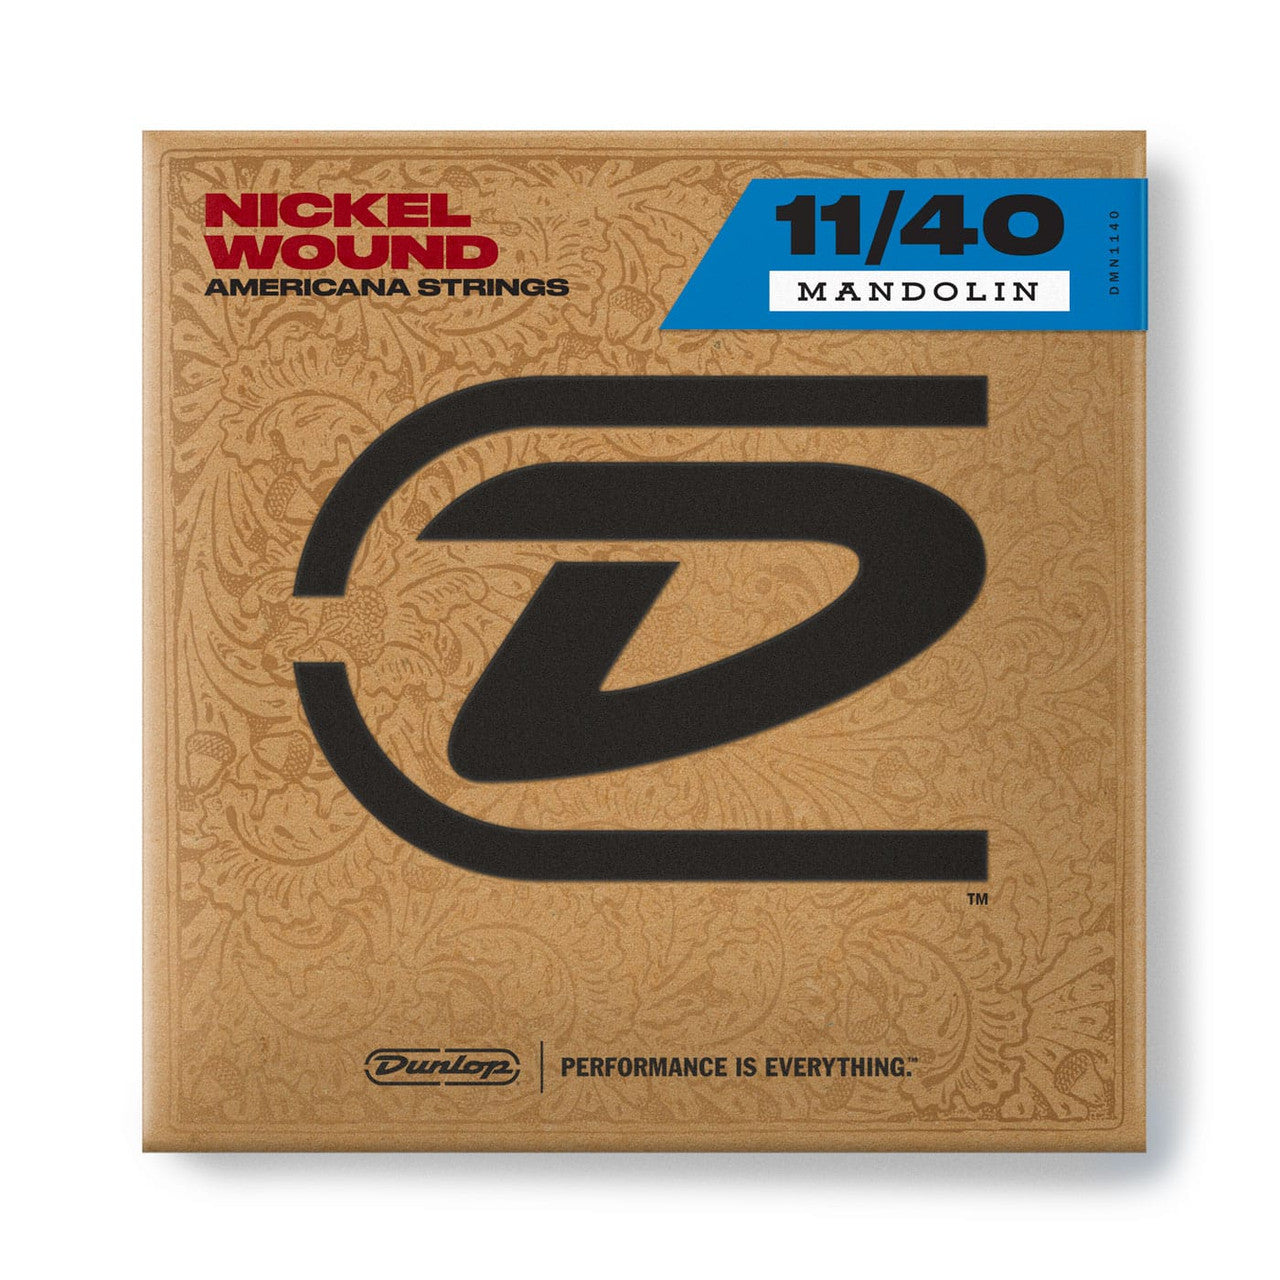 Dunlop Nickel Wound Mandolin Strings 11/40